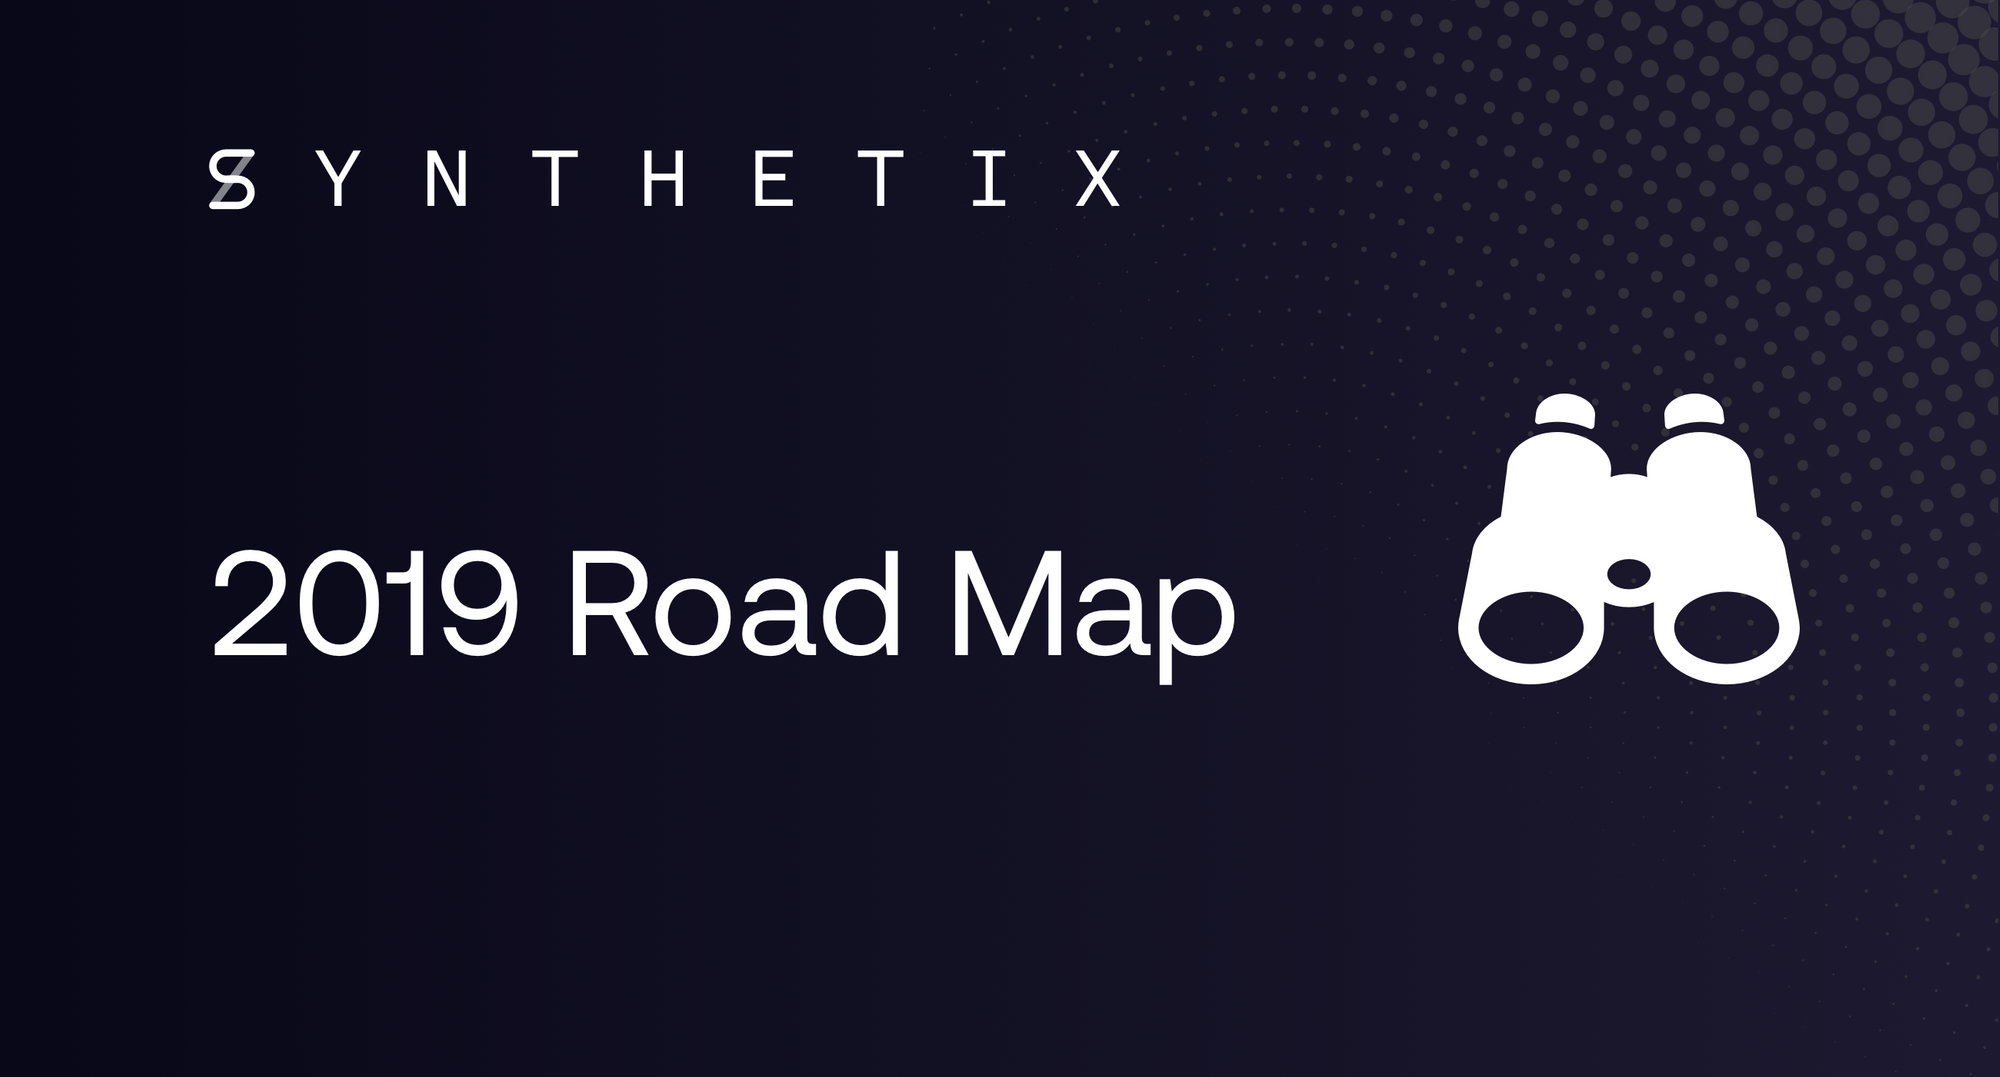 Synthetix 2019 Road Map